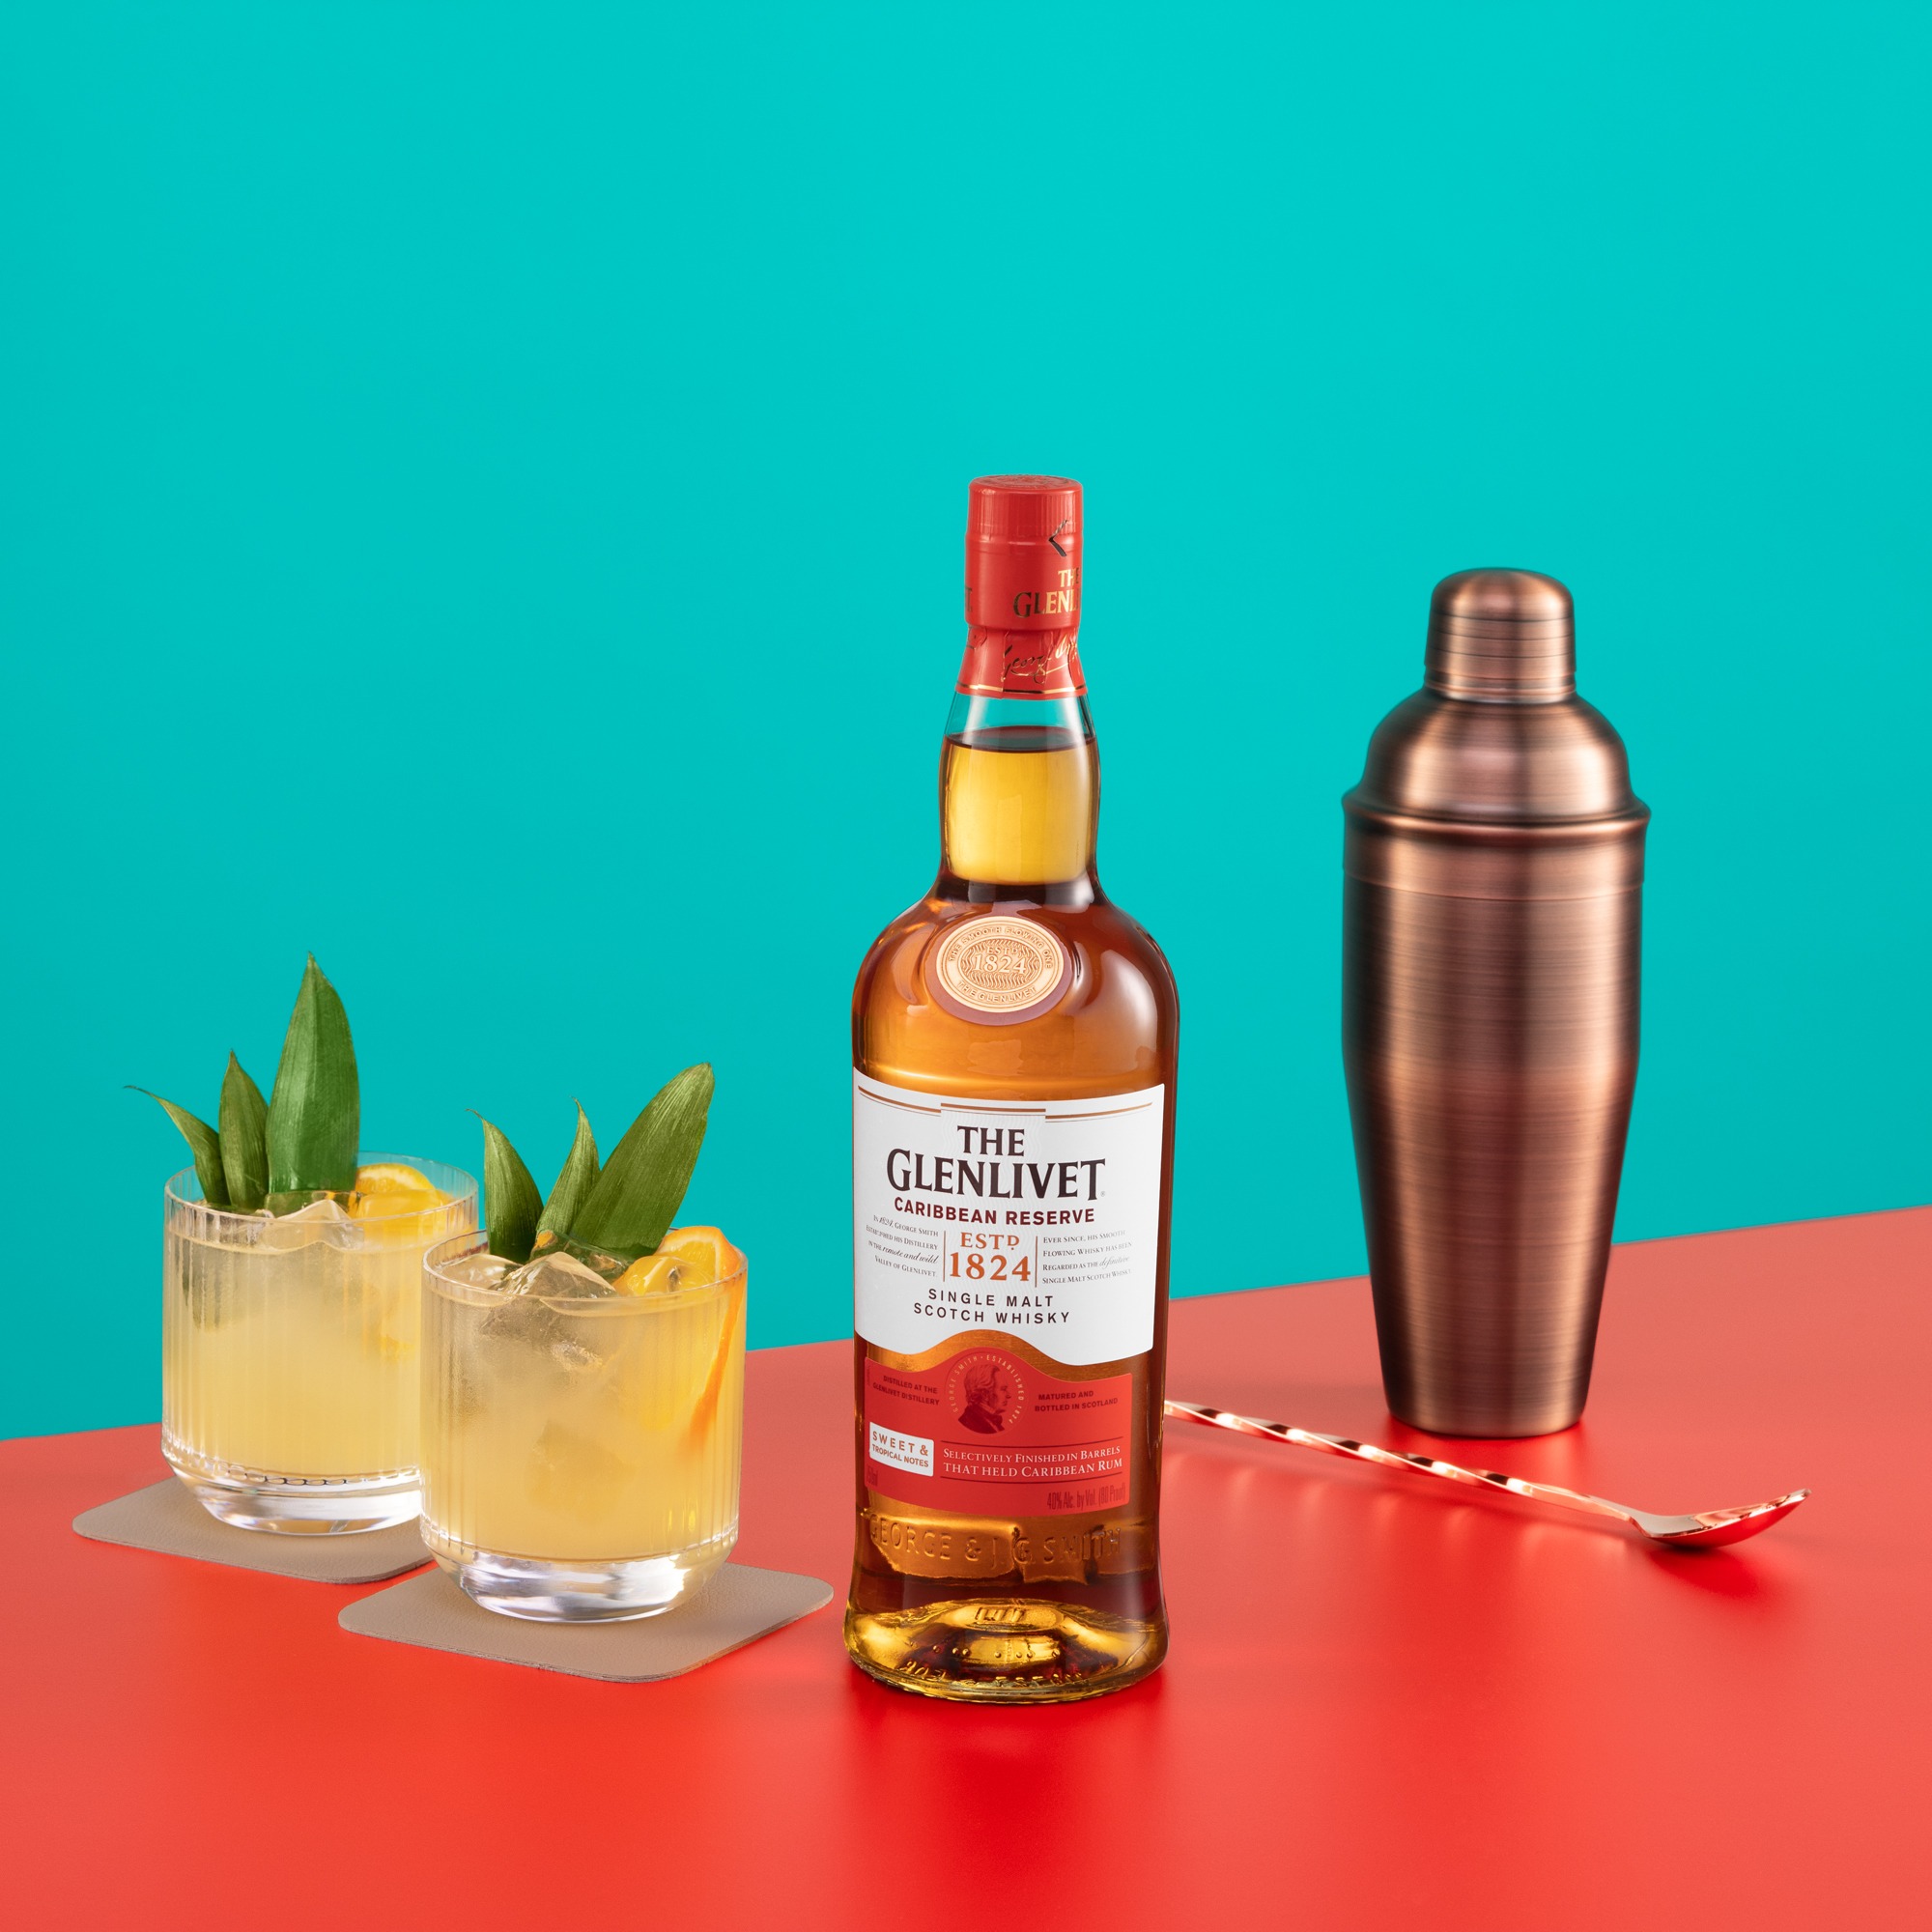 Caribbean reserve single malt scotch whisky shaker cocktails